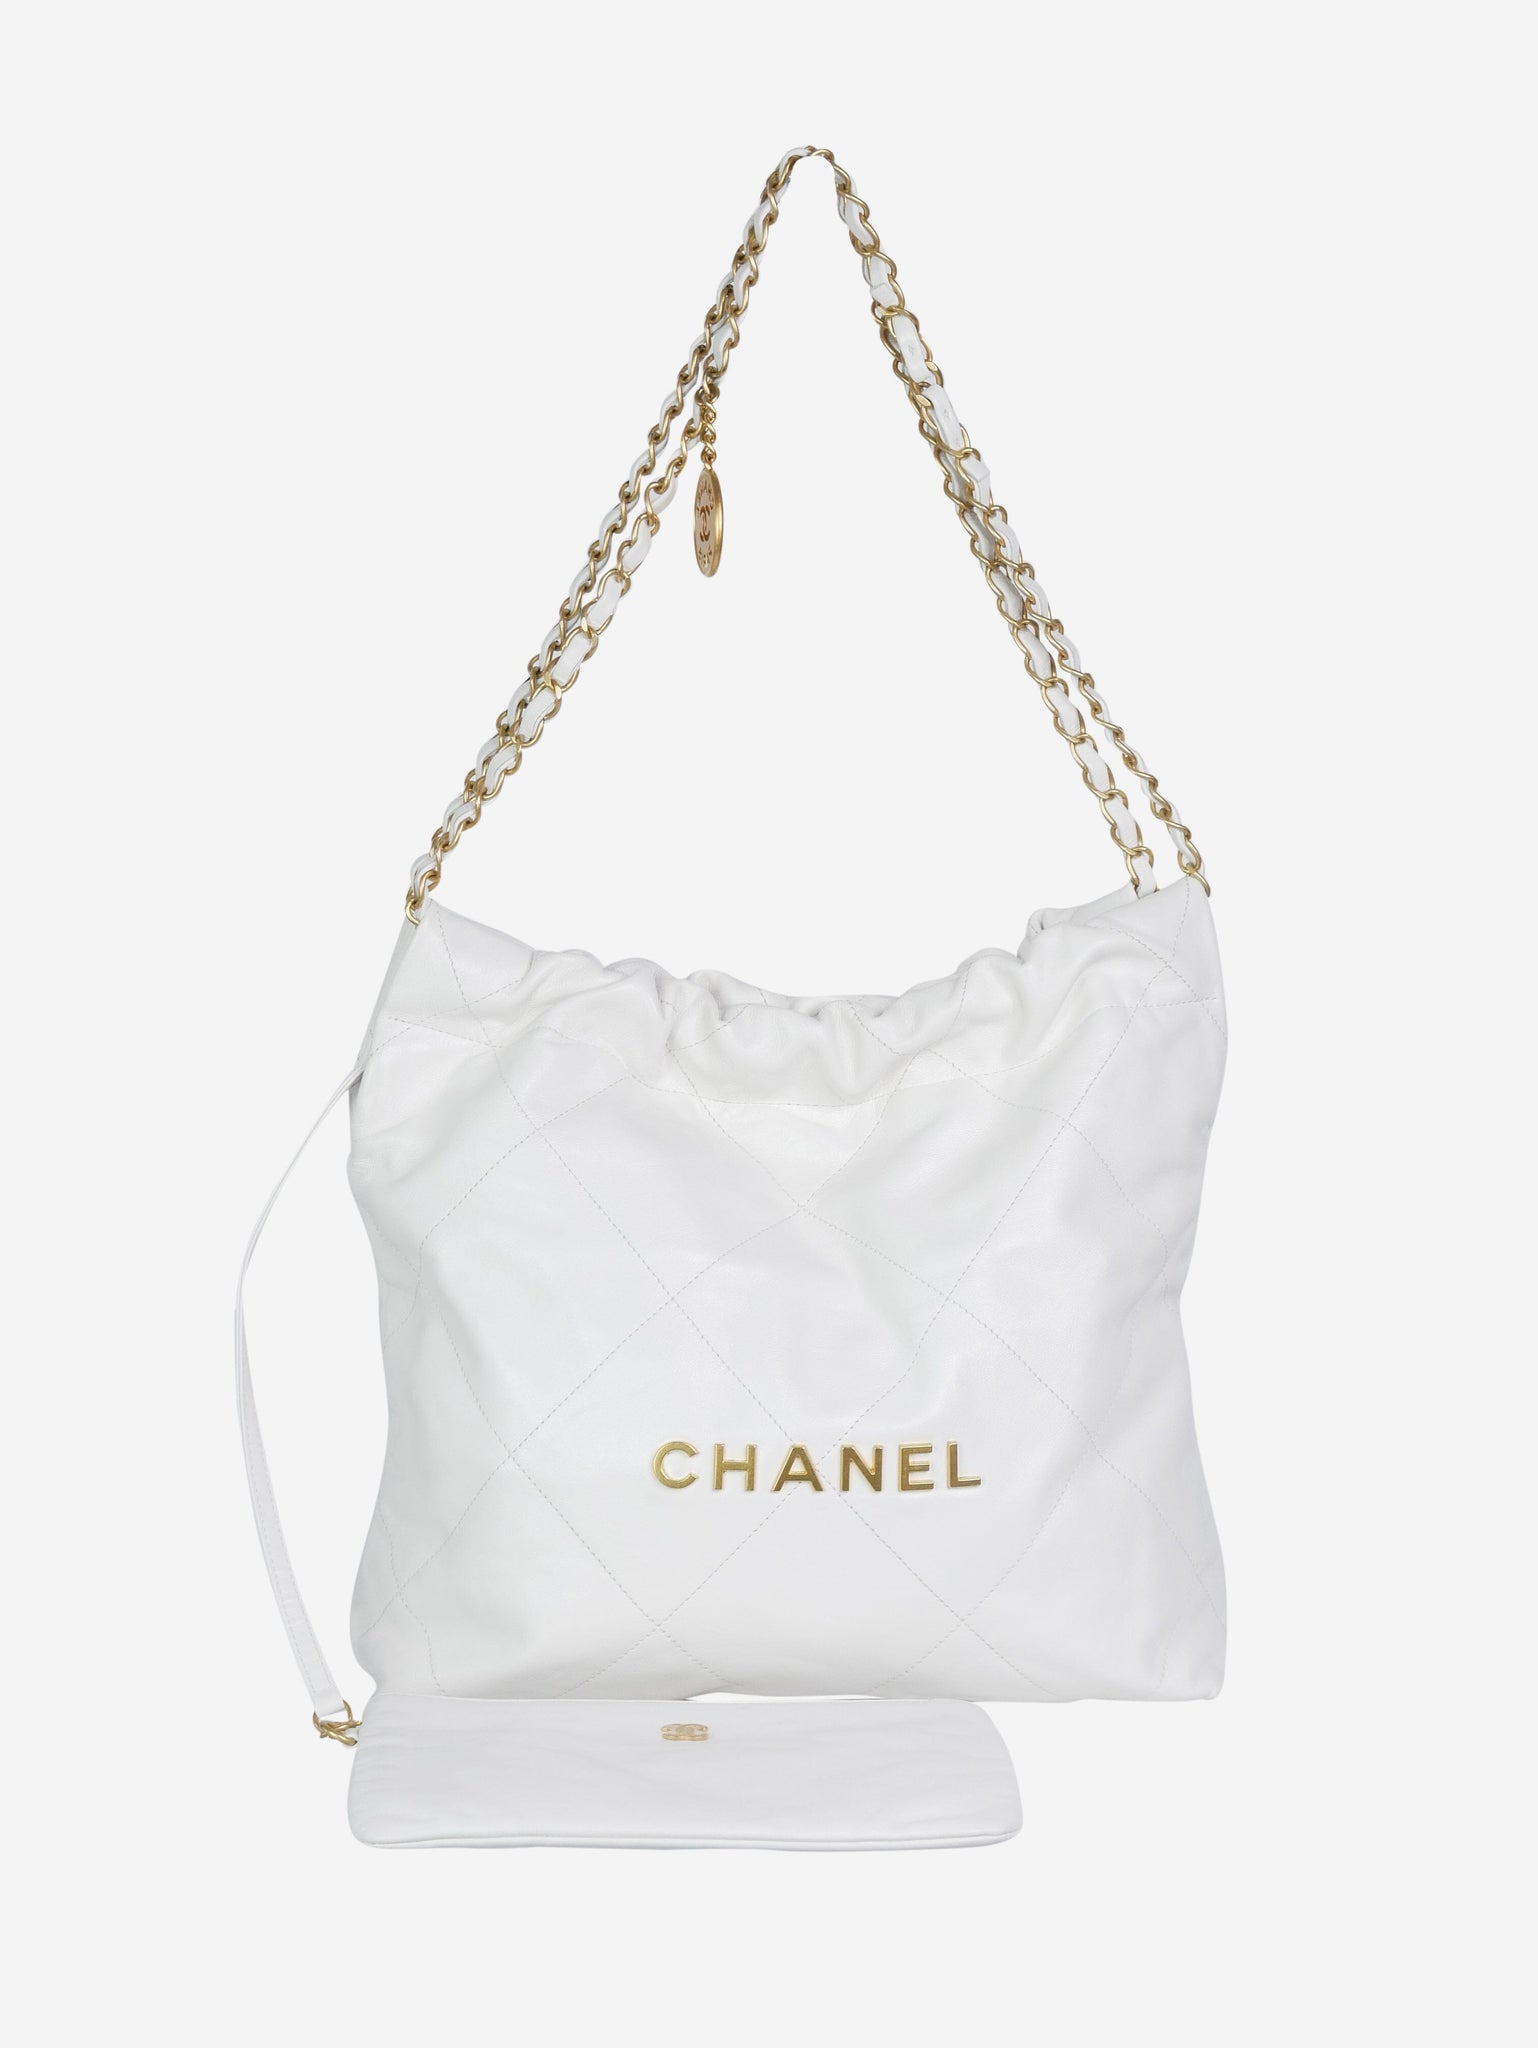 White pre-owned Chanel 22 handbag